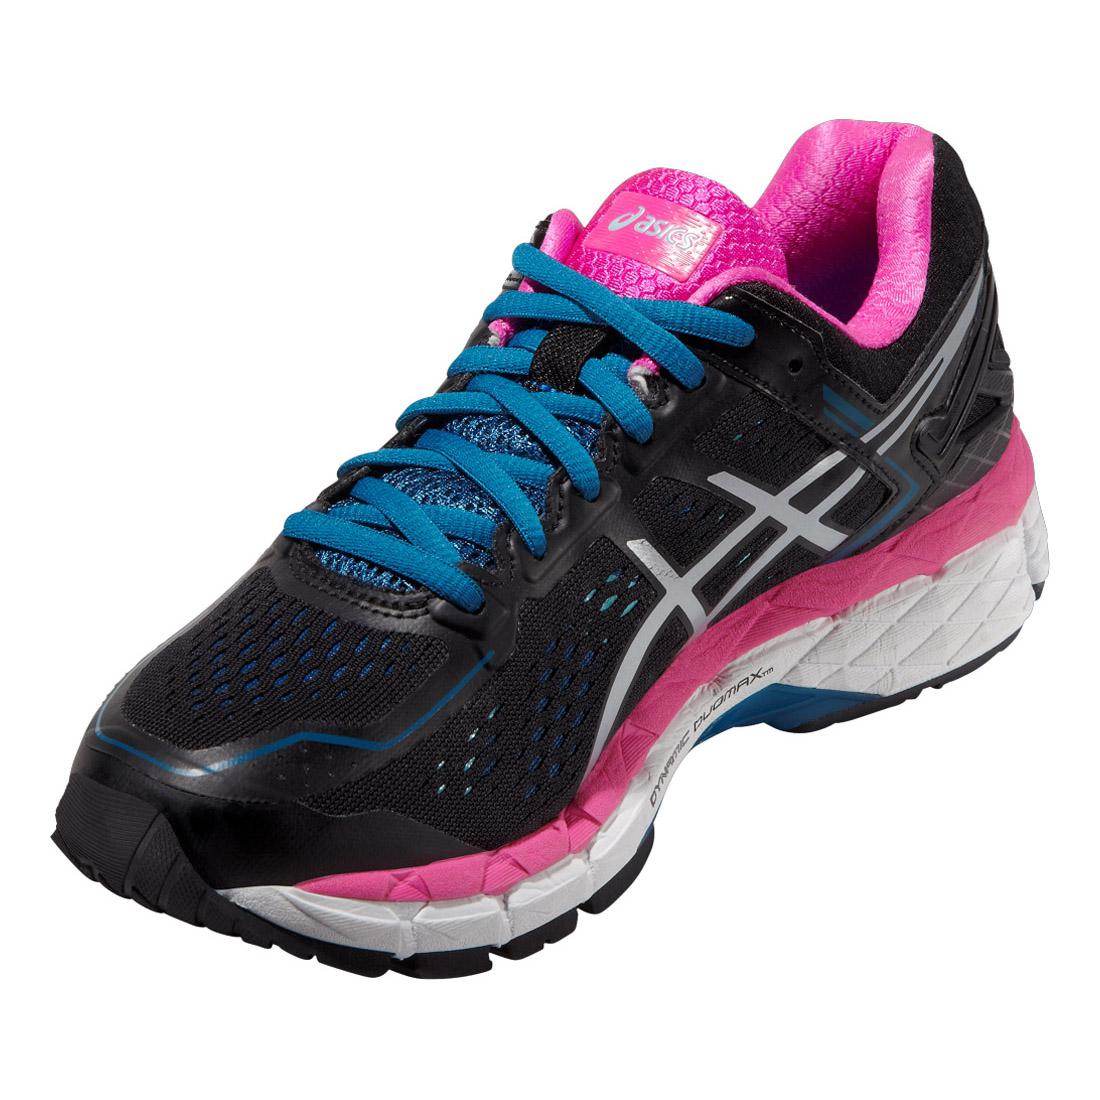 Asics Womens GEL-Kayano 22 Running Shoes - Black/Pink - Tennisnuts.com